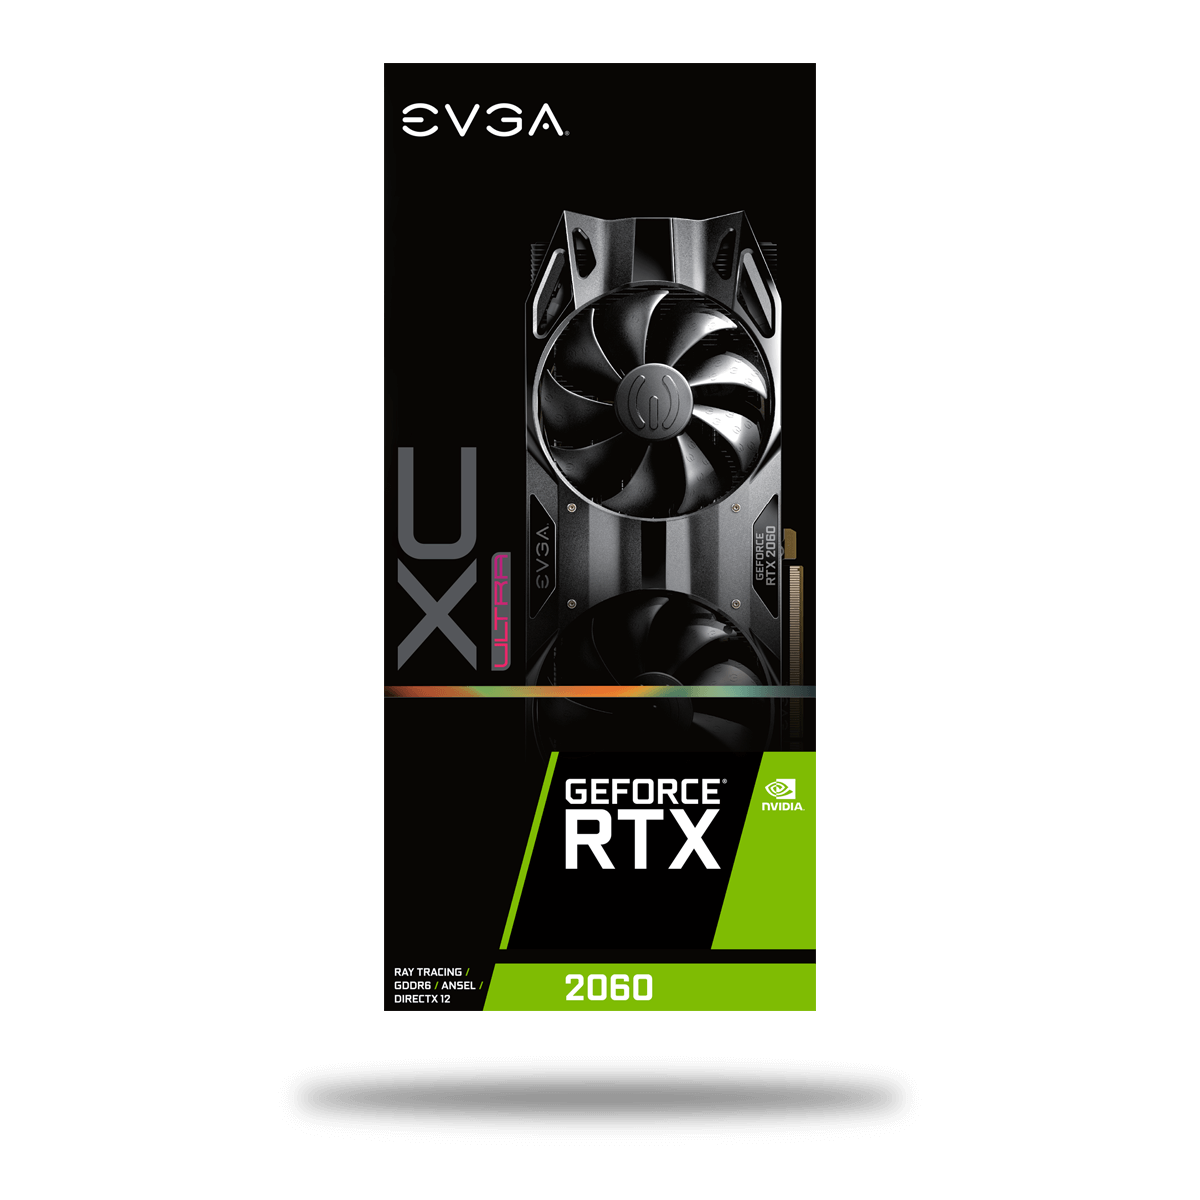 EVGA - Asia - Products - EVGA GeForce RTX 2060 XC ULTRA GAMING 